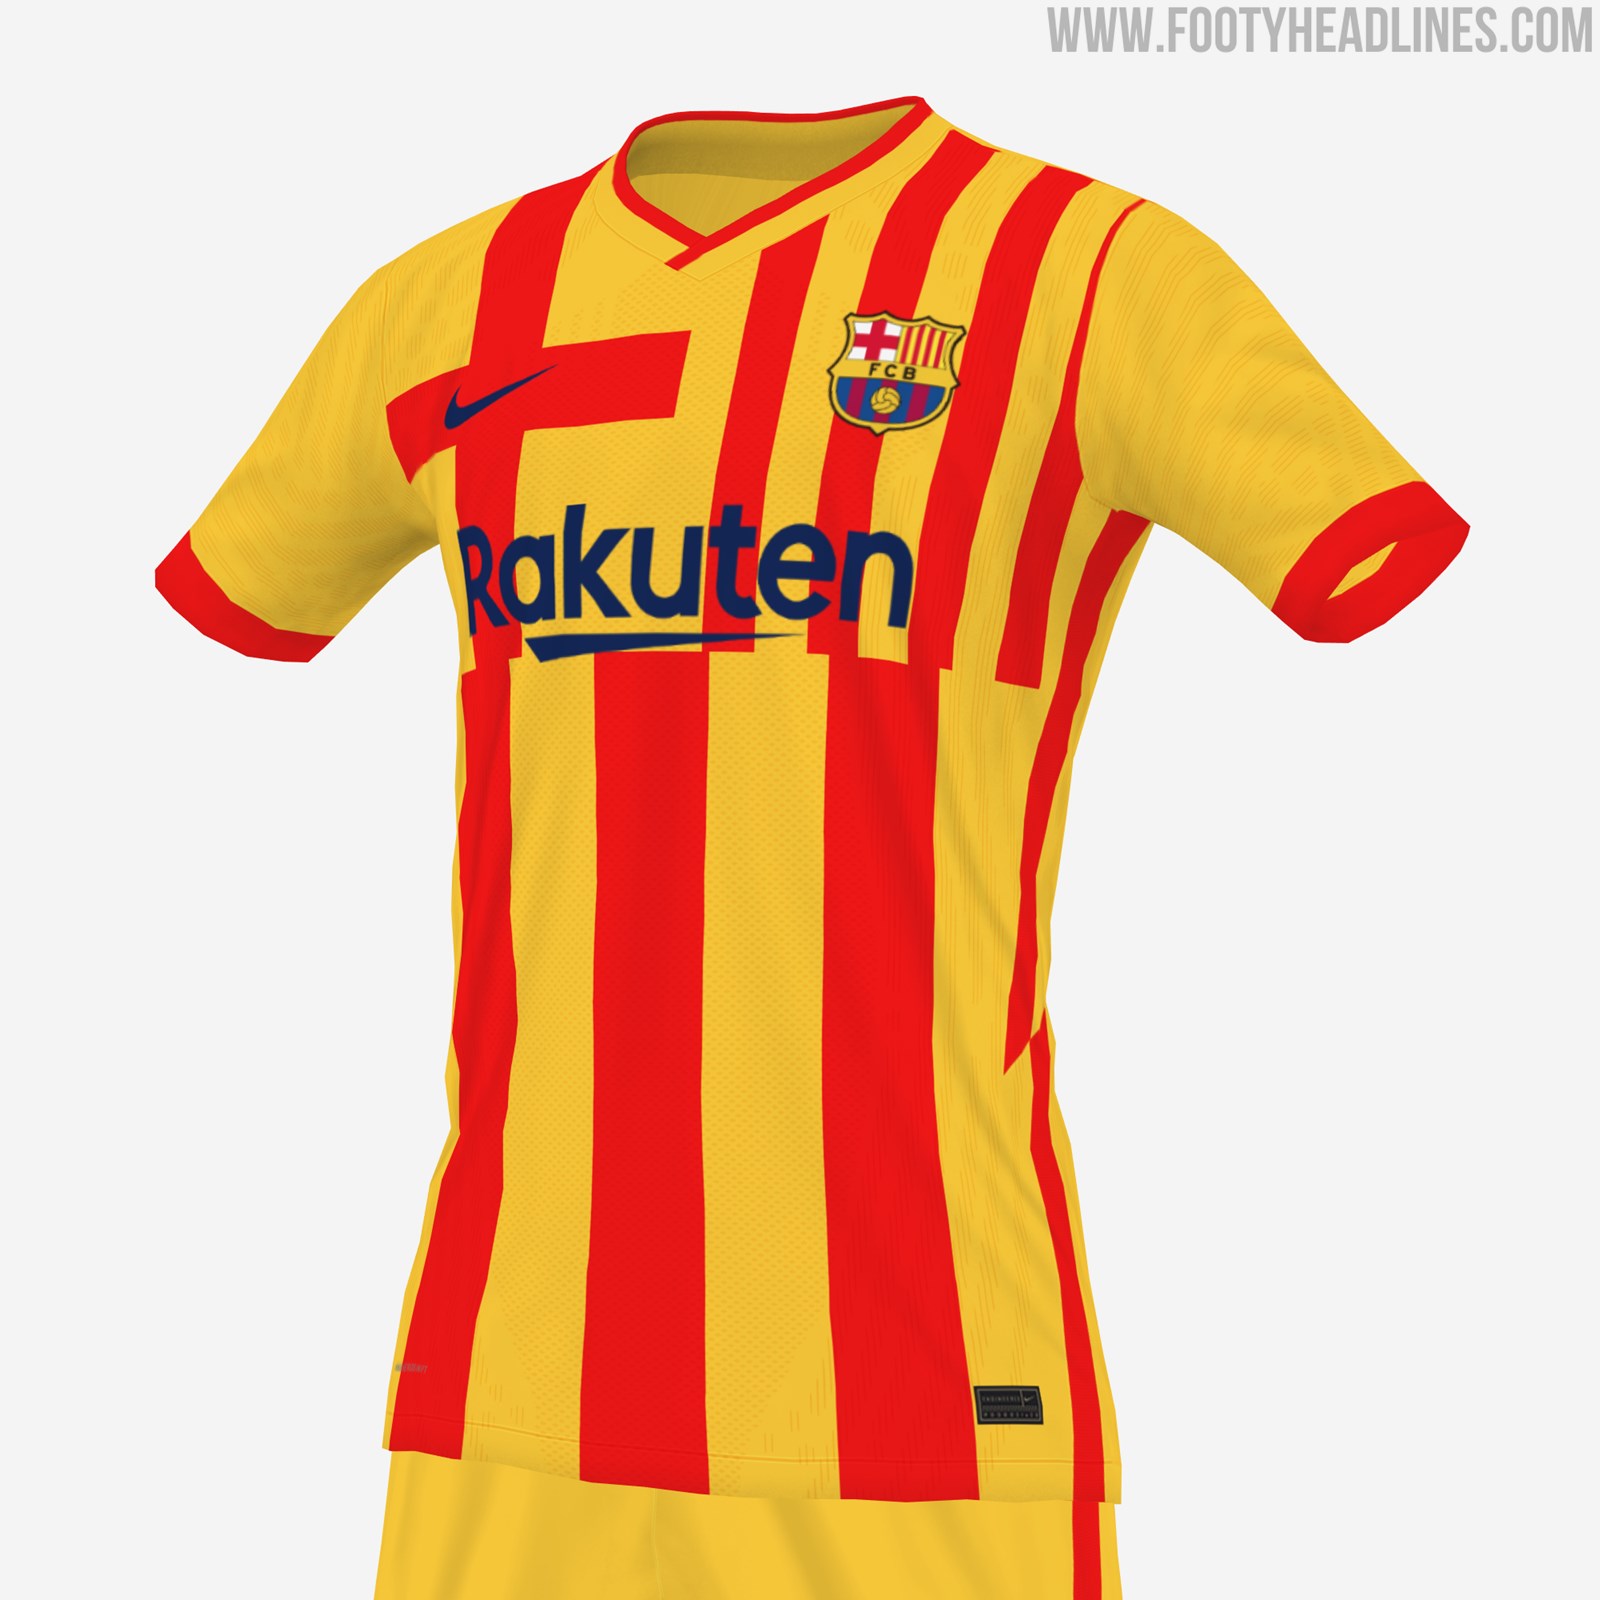 Better Fitting For Barça? 3 Alternative FC Barcelona 21-22 Kits With